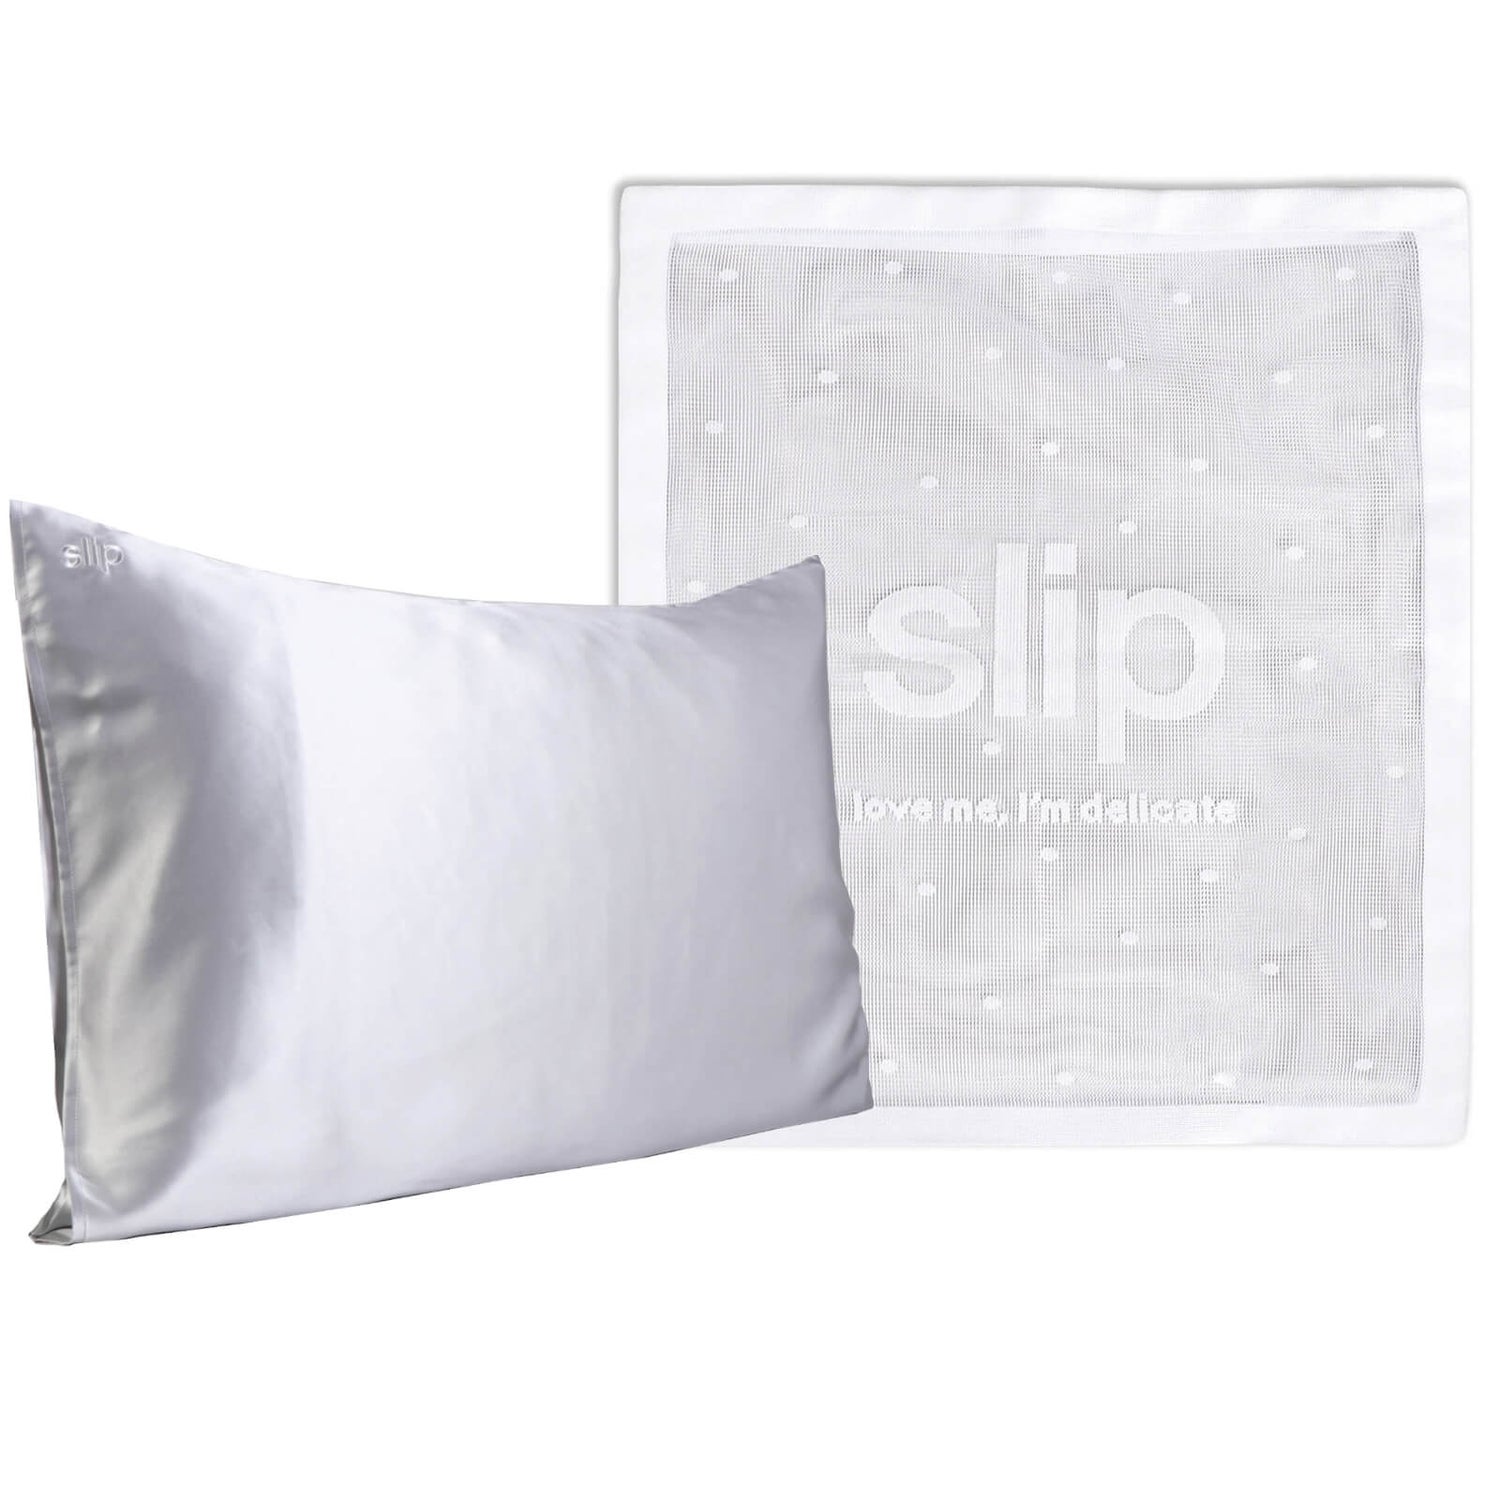 Slip Dermstore Exclusive Silk Silver Pillowcase Duo and Delicates Bag (Worth $193.00)